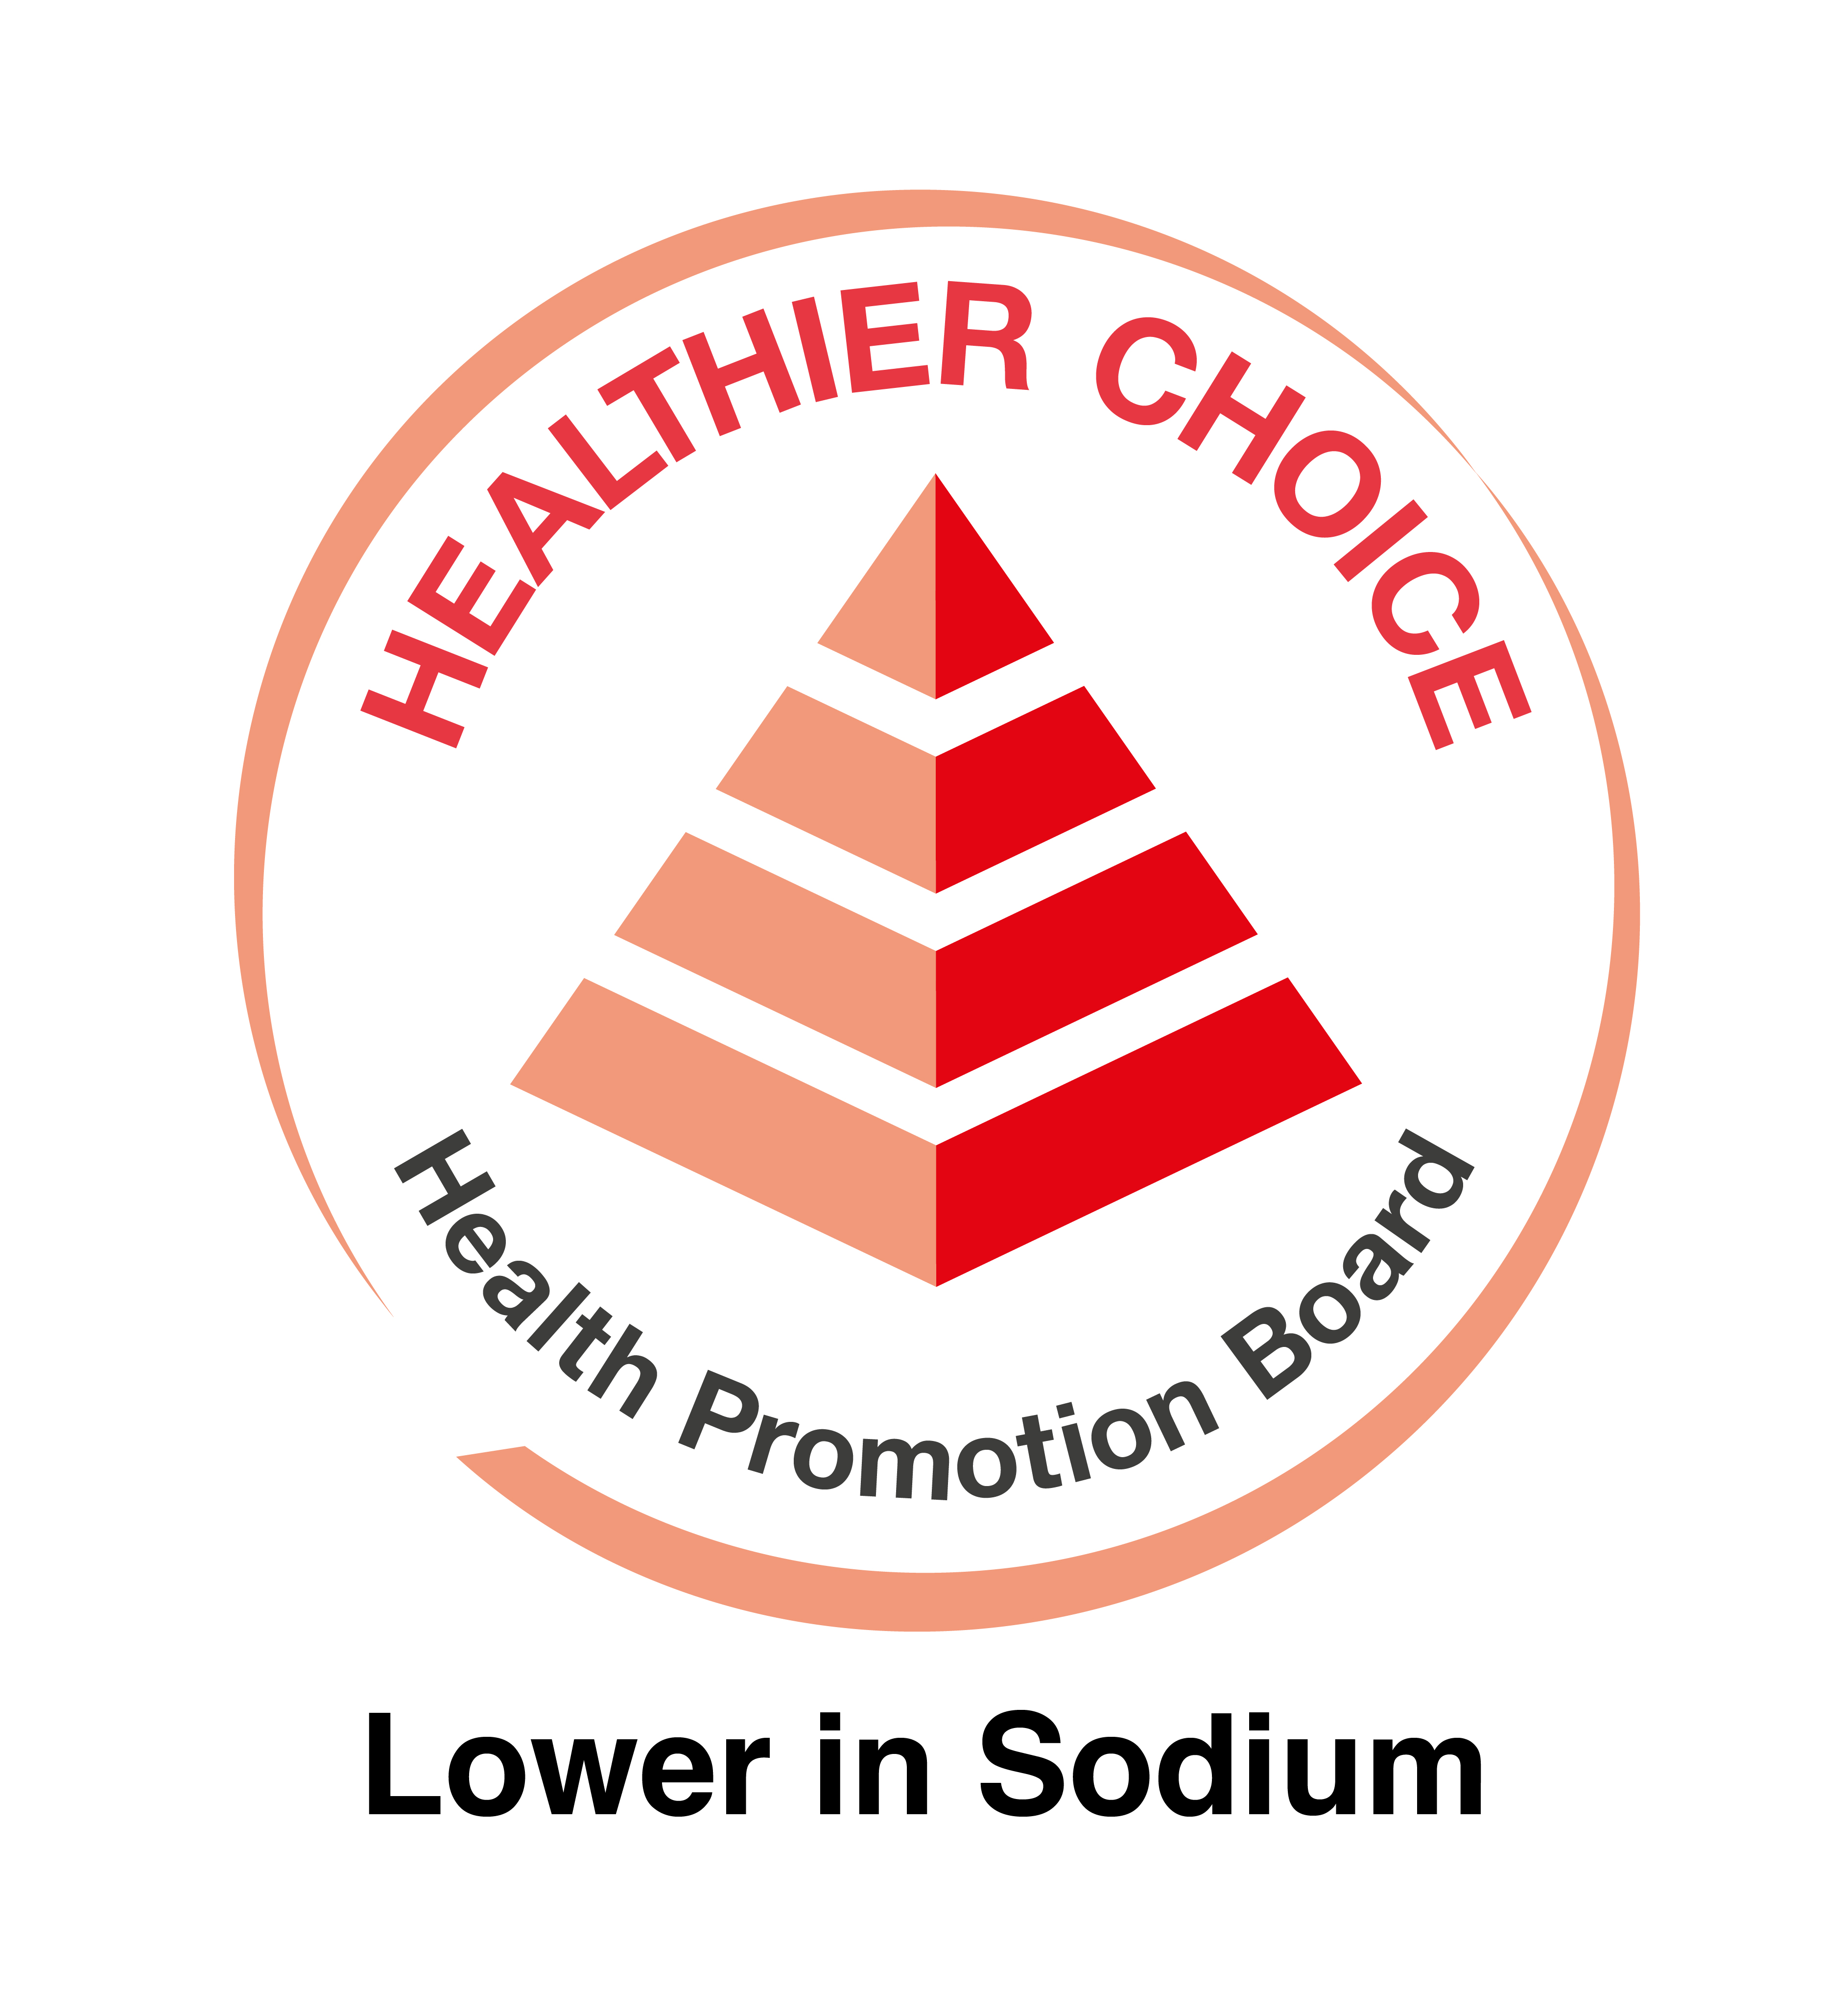 Healthier Choice Symbol (HCS) - Lower in sodium